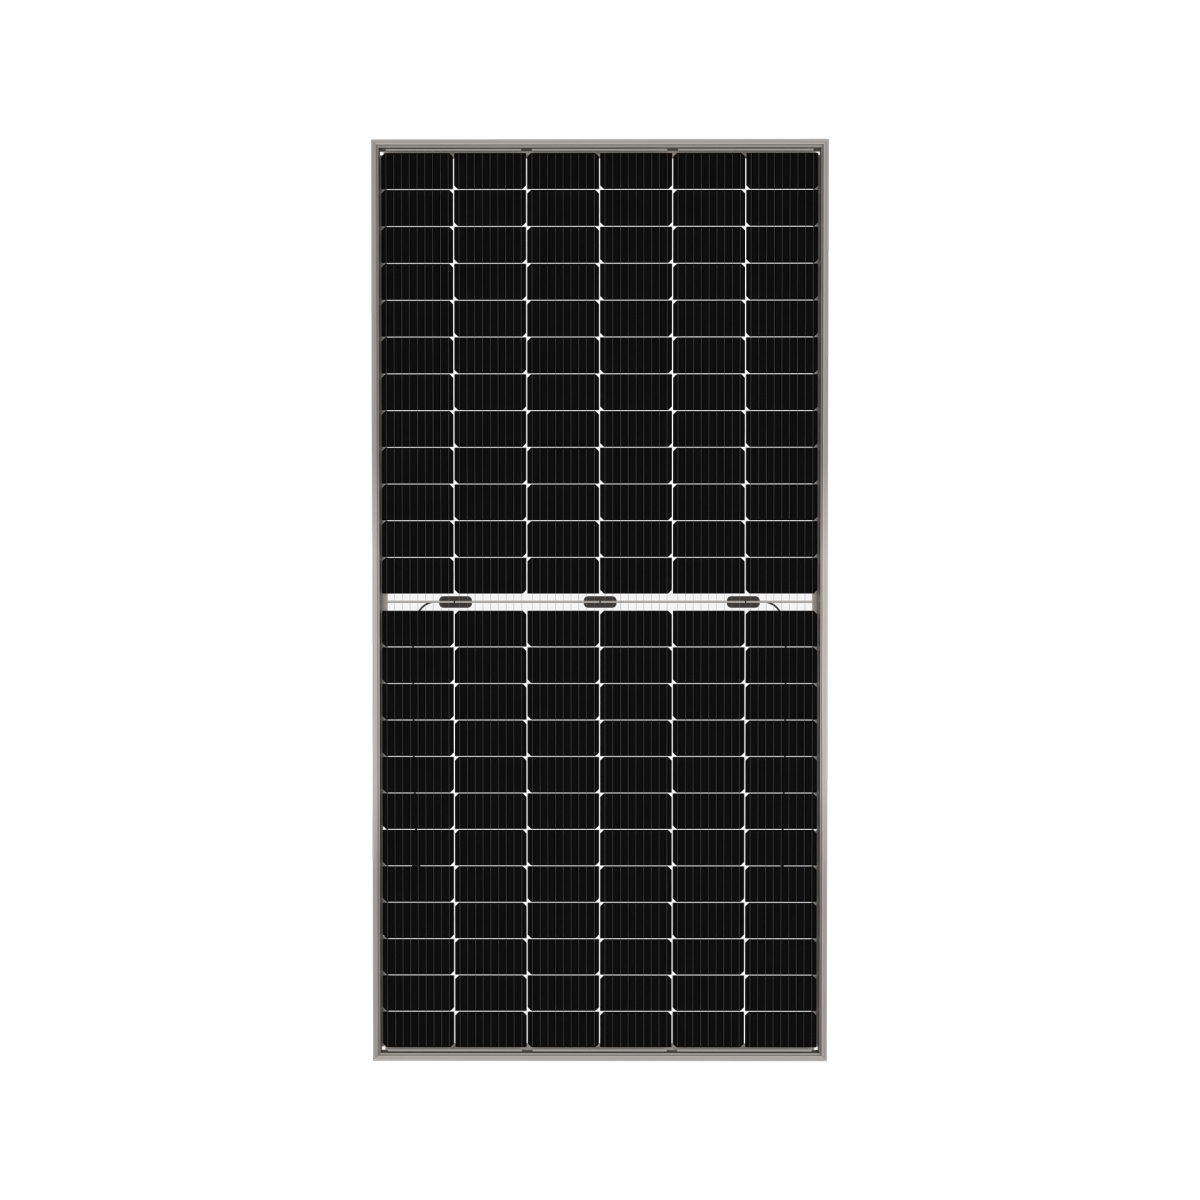 TommaTech 425 Watt 144 Percmono Bifacial Half-Cut Multi Busbar Solar Panel